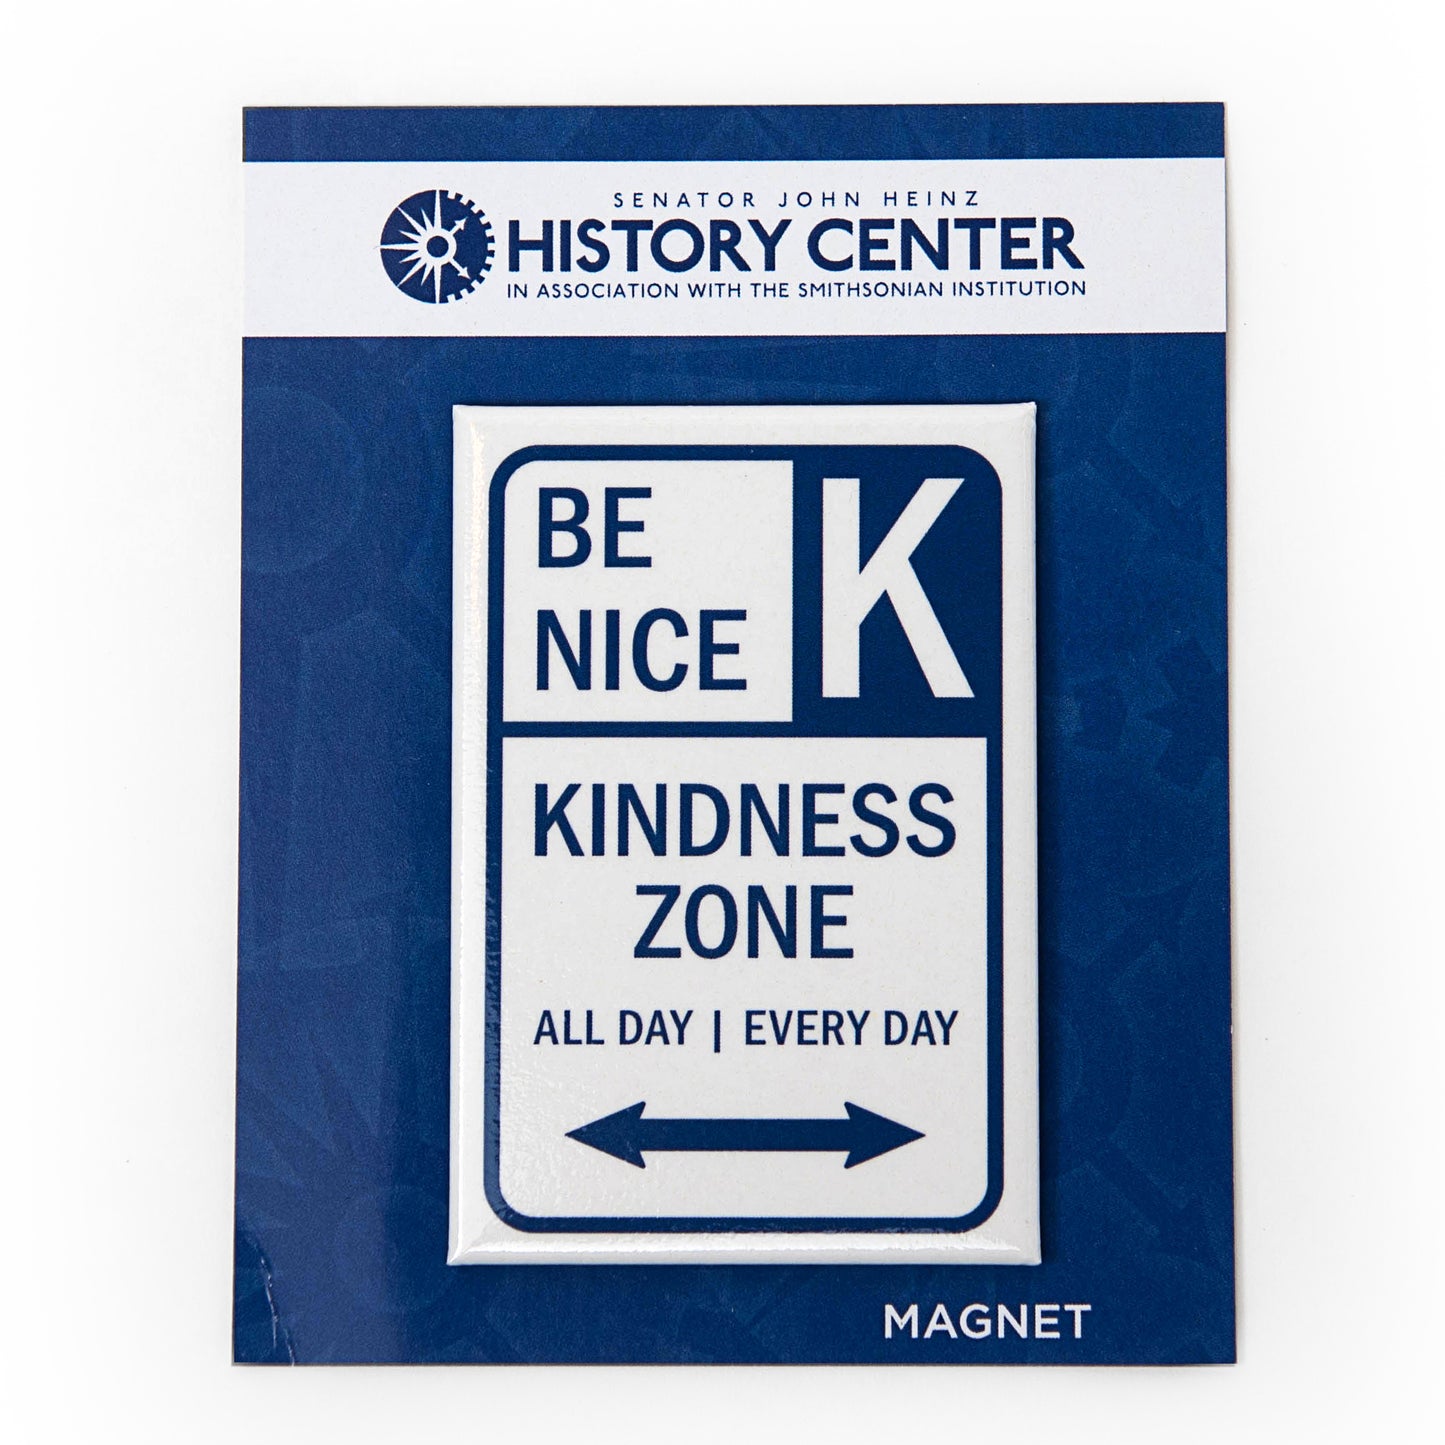 "Kindness Zone" Magnet